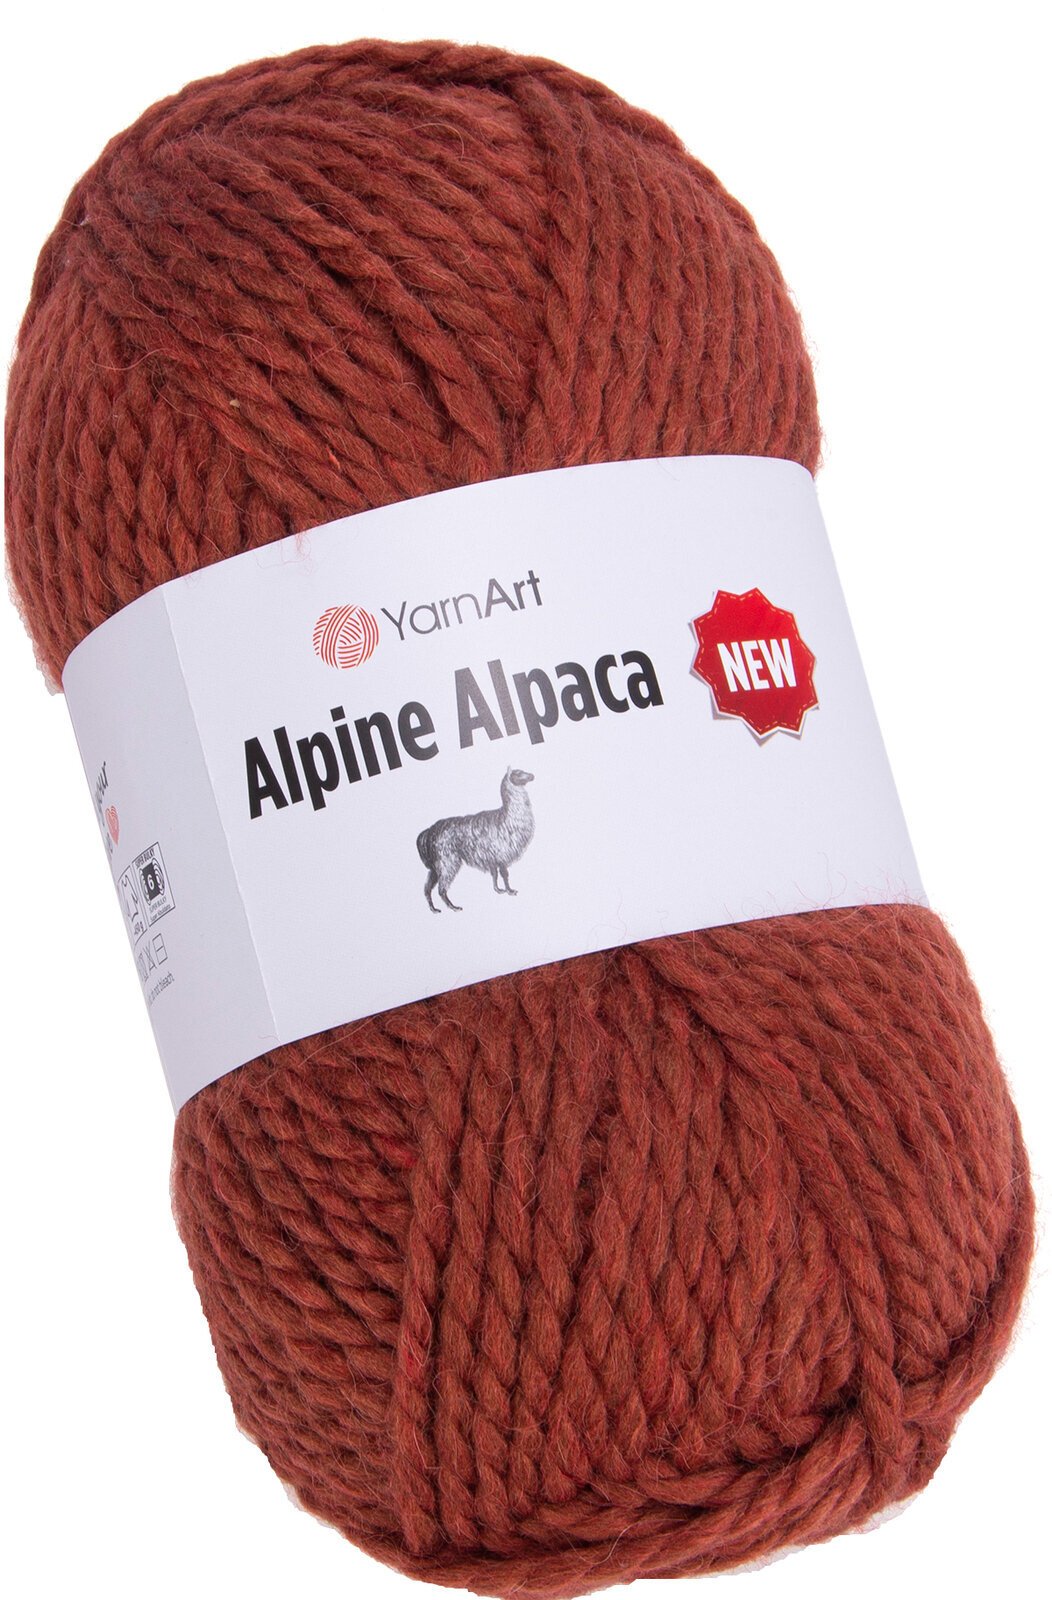 Strickgarn Yarn Art Alpine Alpaca New 1452 Strickgarn